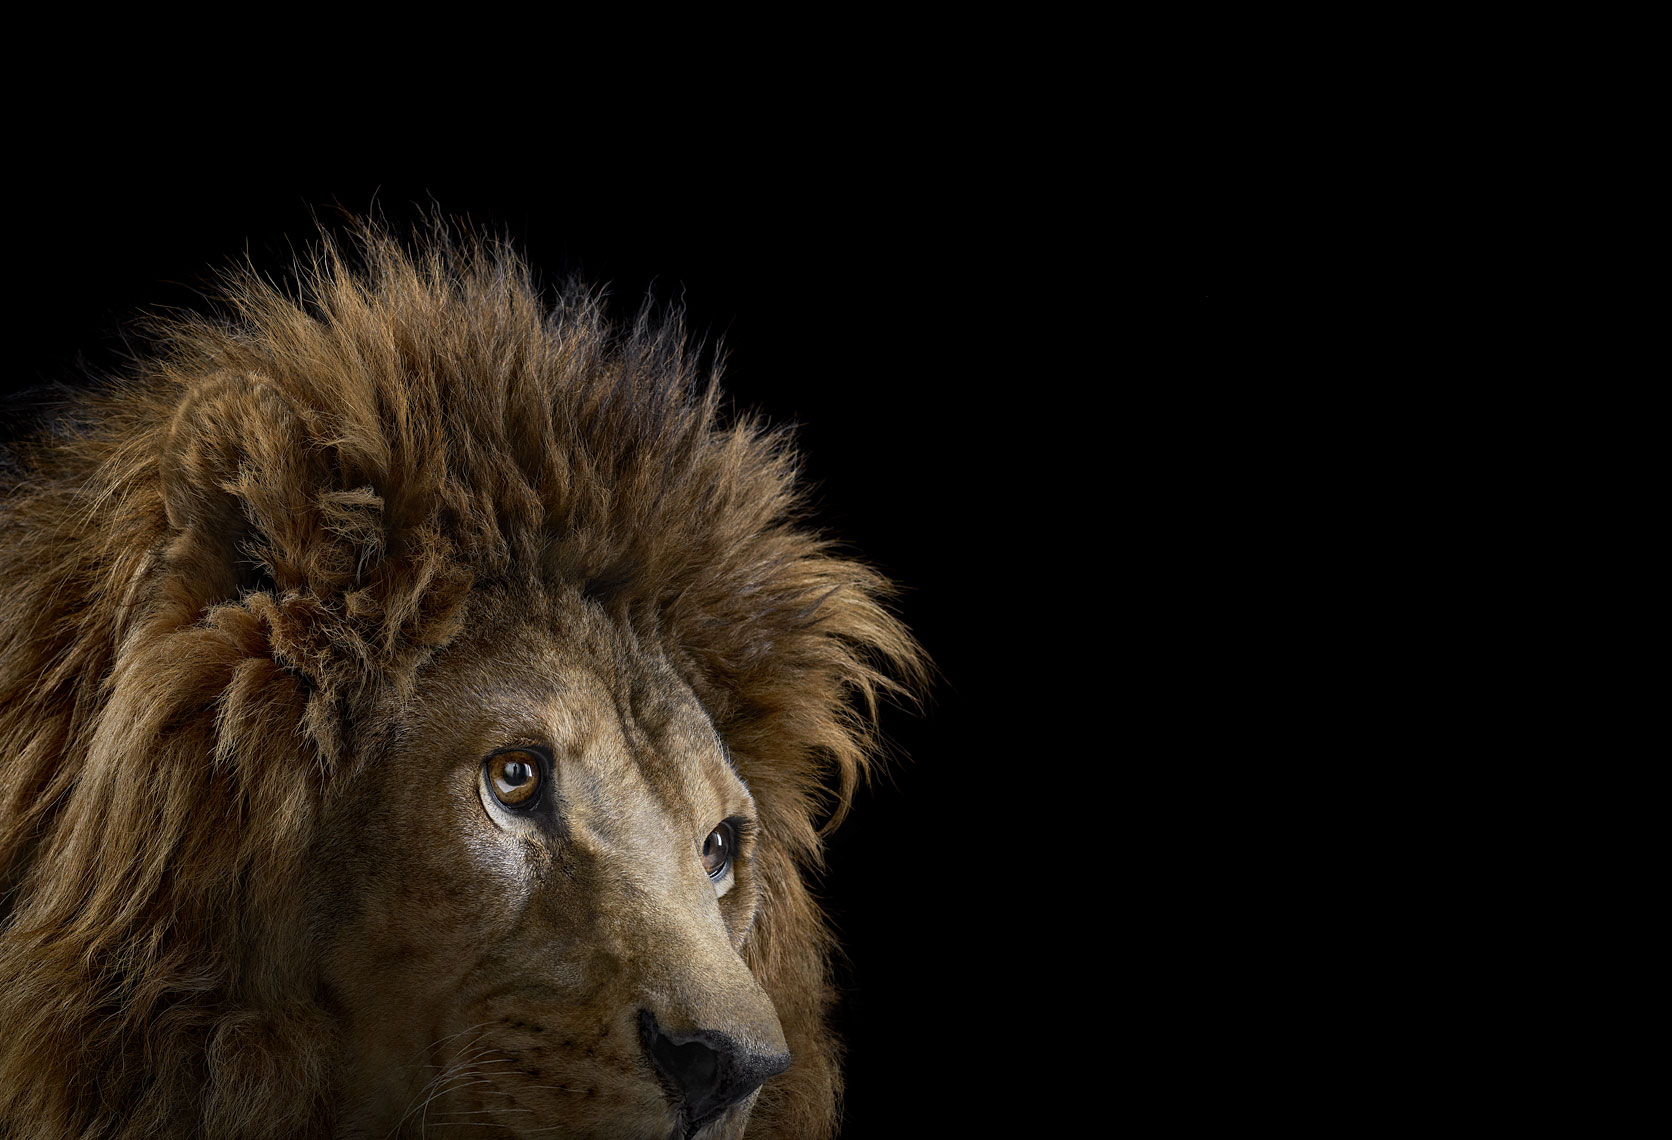 Lion studio portrait by wildlife photographer Brad Wilson